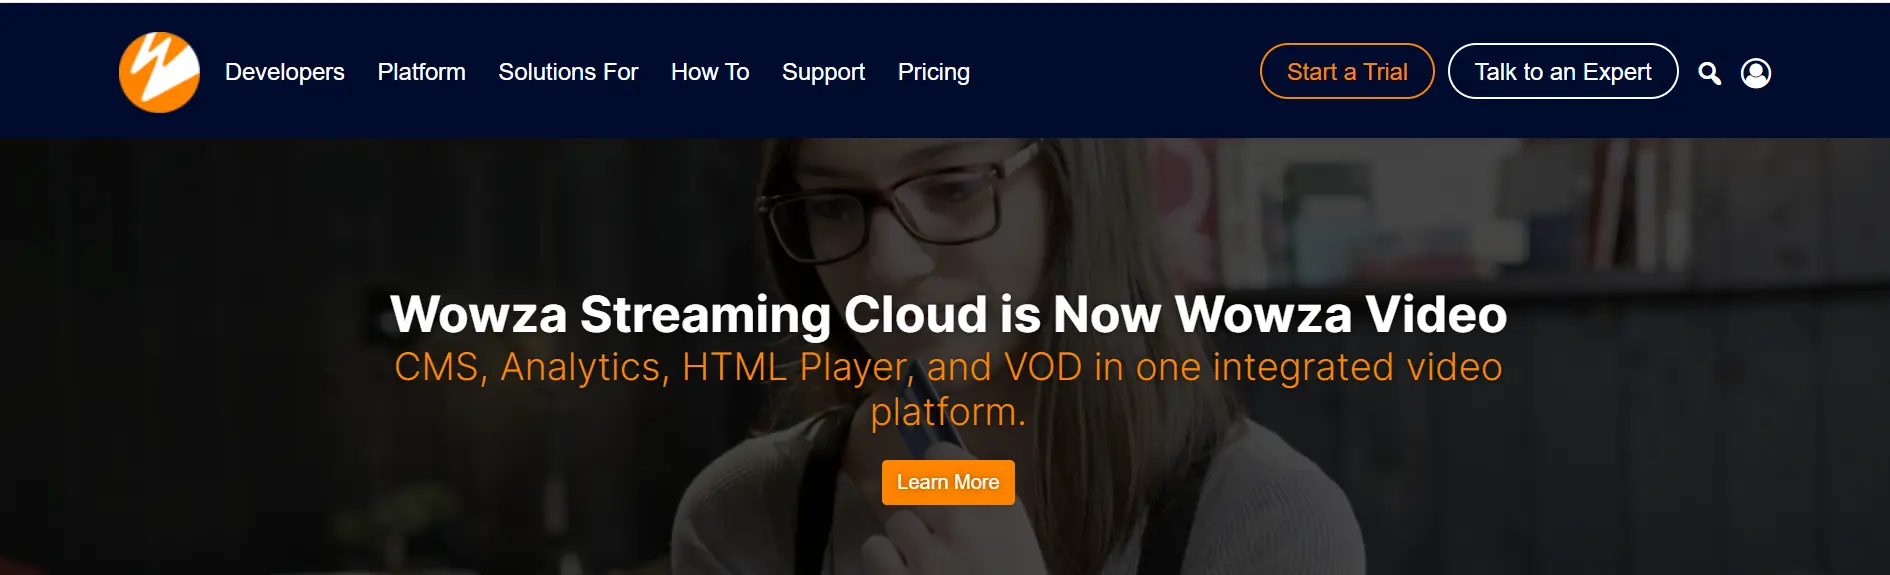 Cloud Video Streaming